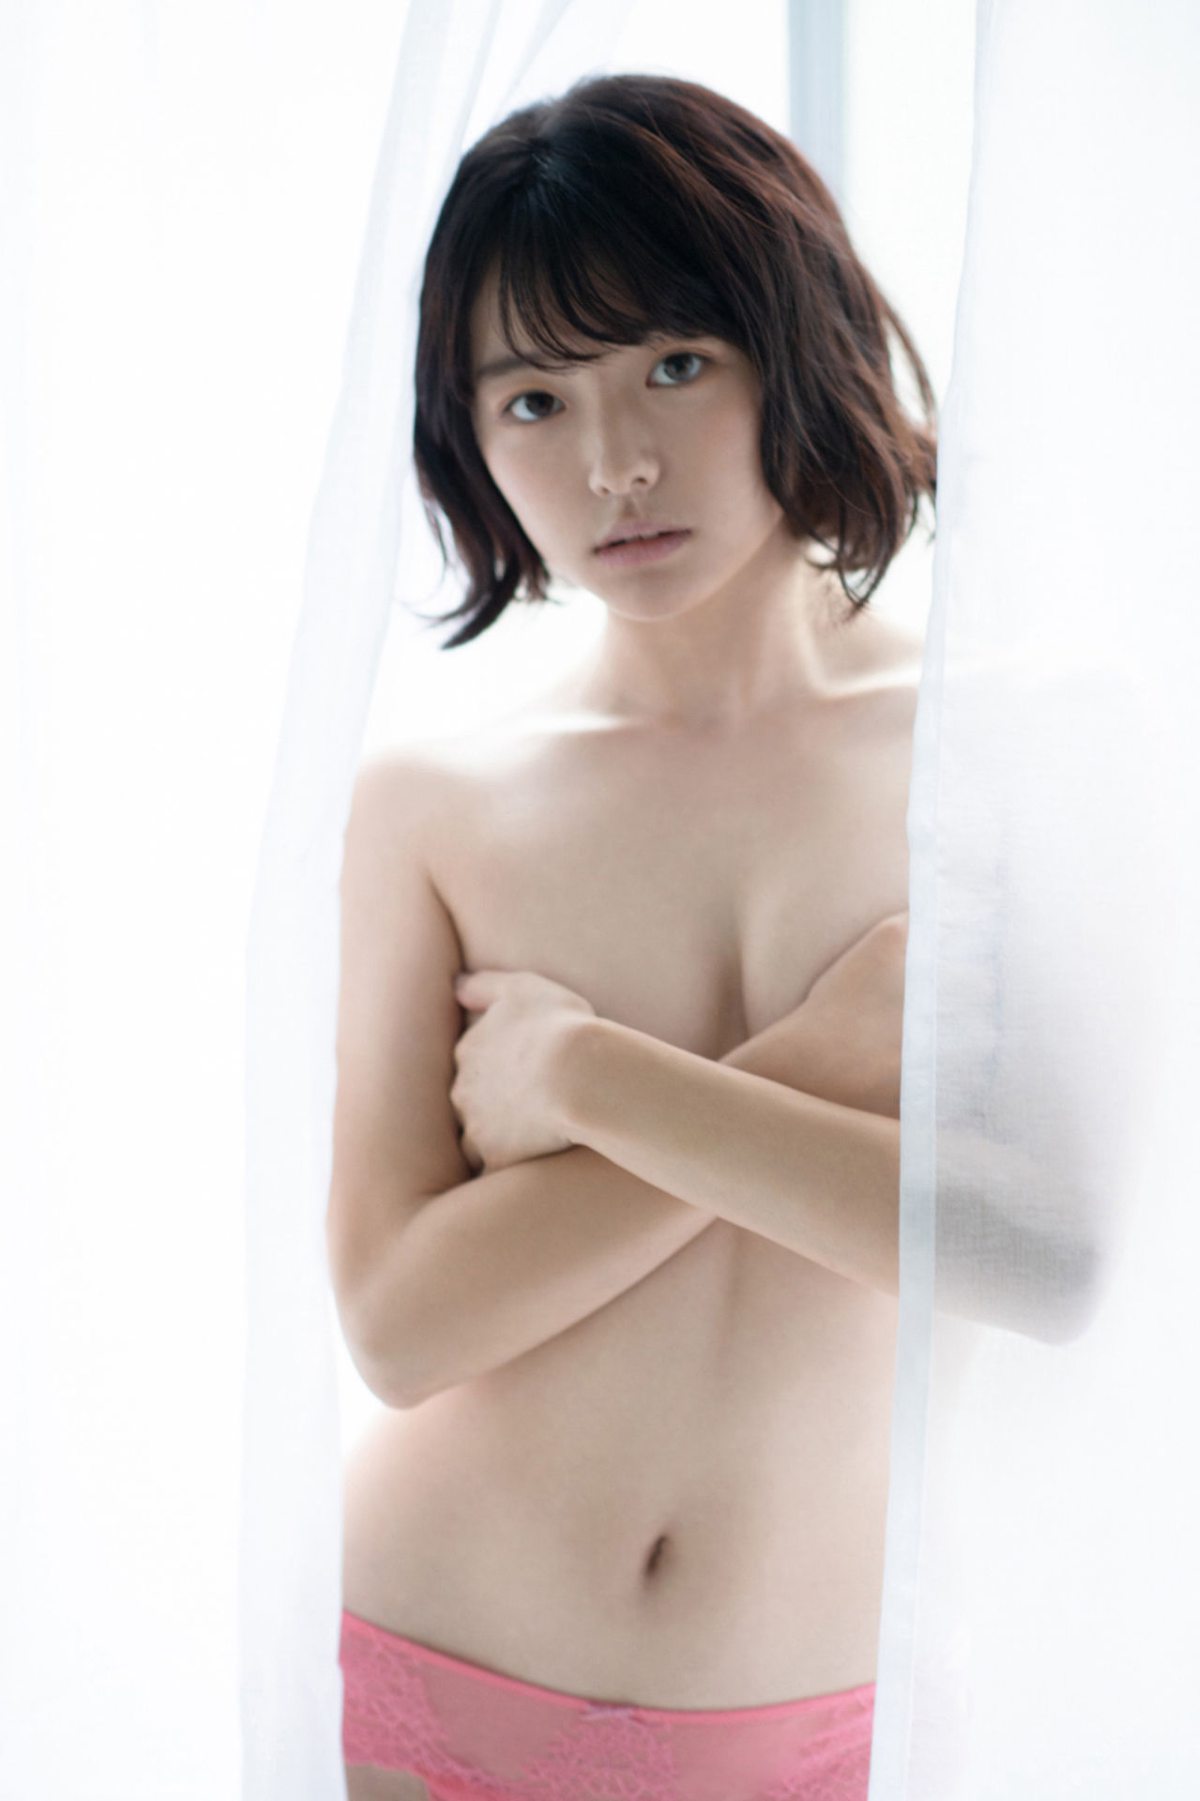 FRIDAY Digital Photobook 2021 03 26 Tsubasa Hazuki 葉月つばさ New Frontier Full Nude Vol 2 新境地フルヌード Vol 2 A 00042 8879879873.jpg